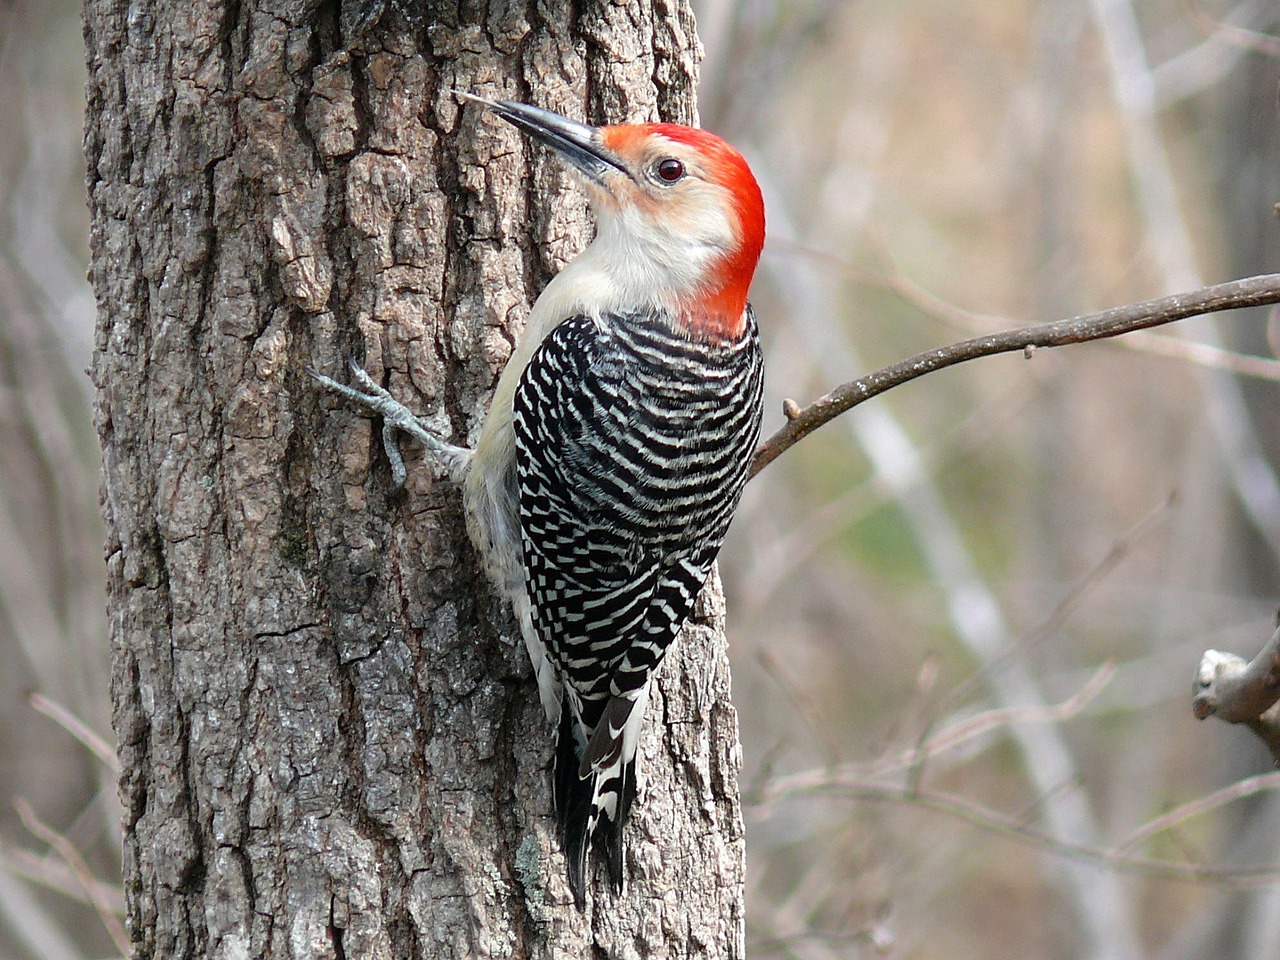 Woodpecker As An Animal Spirit Guide